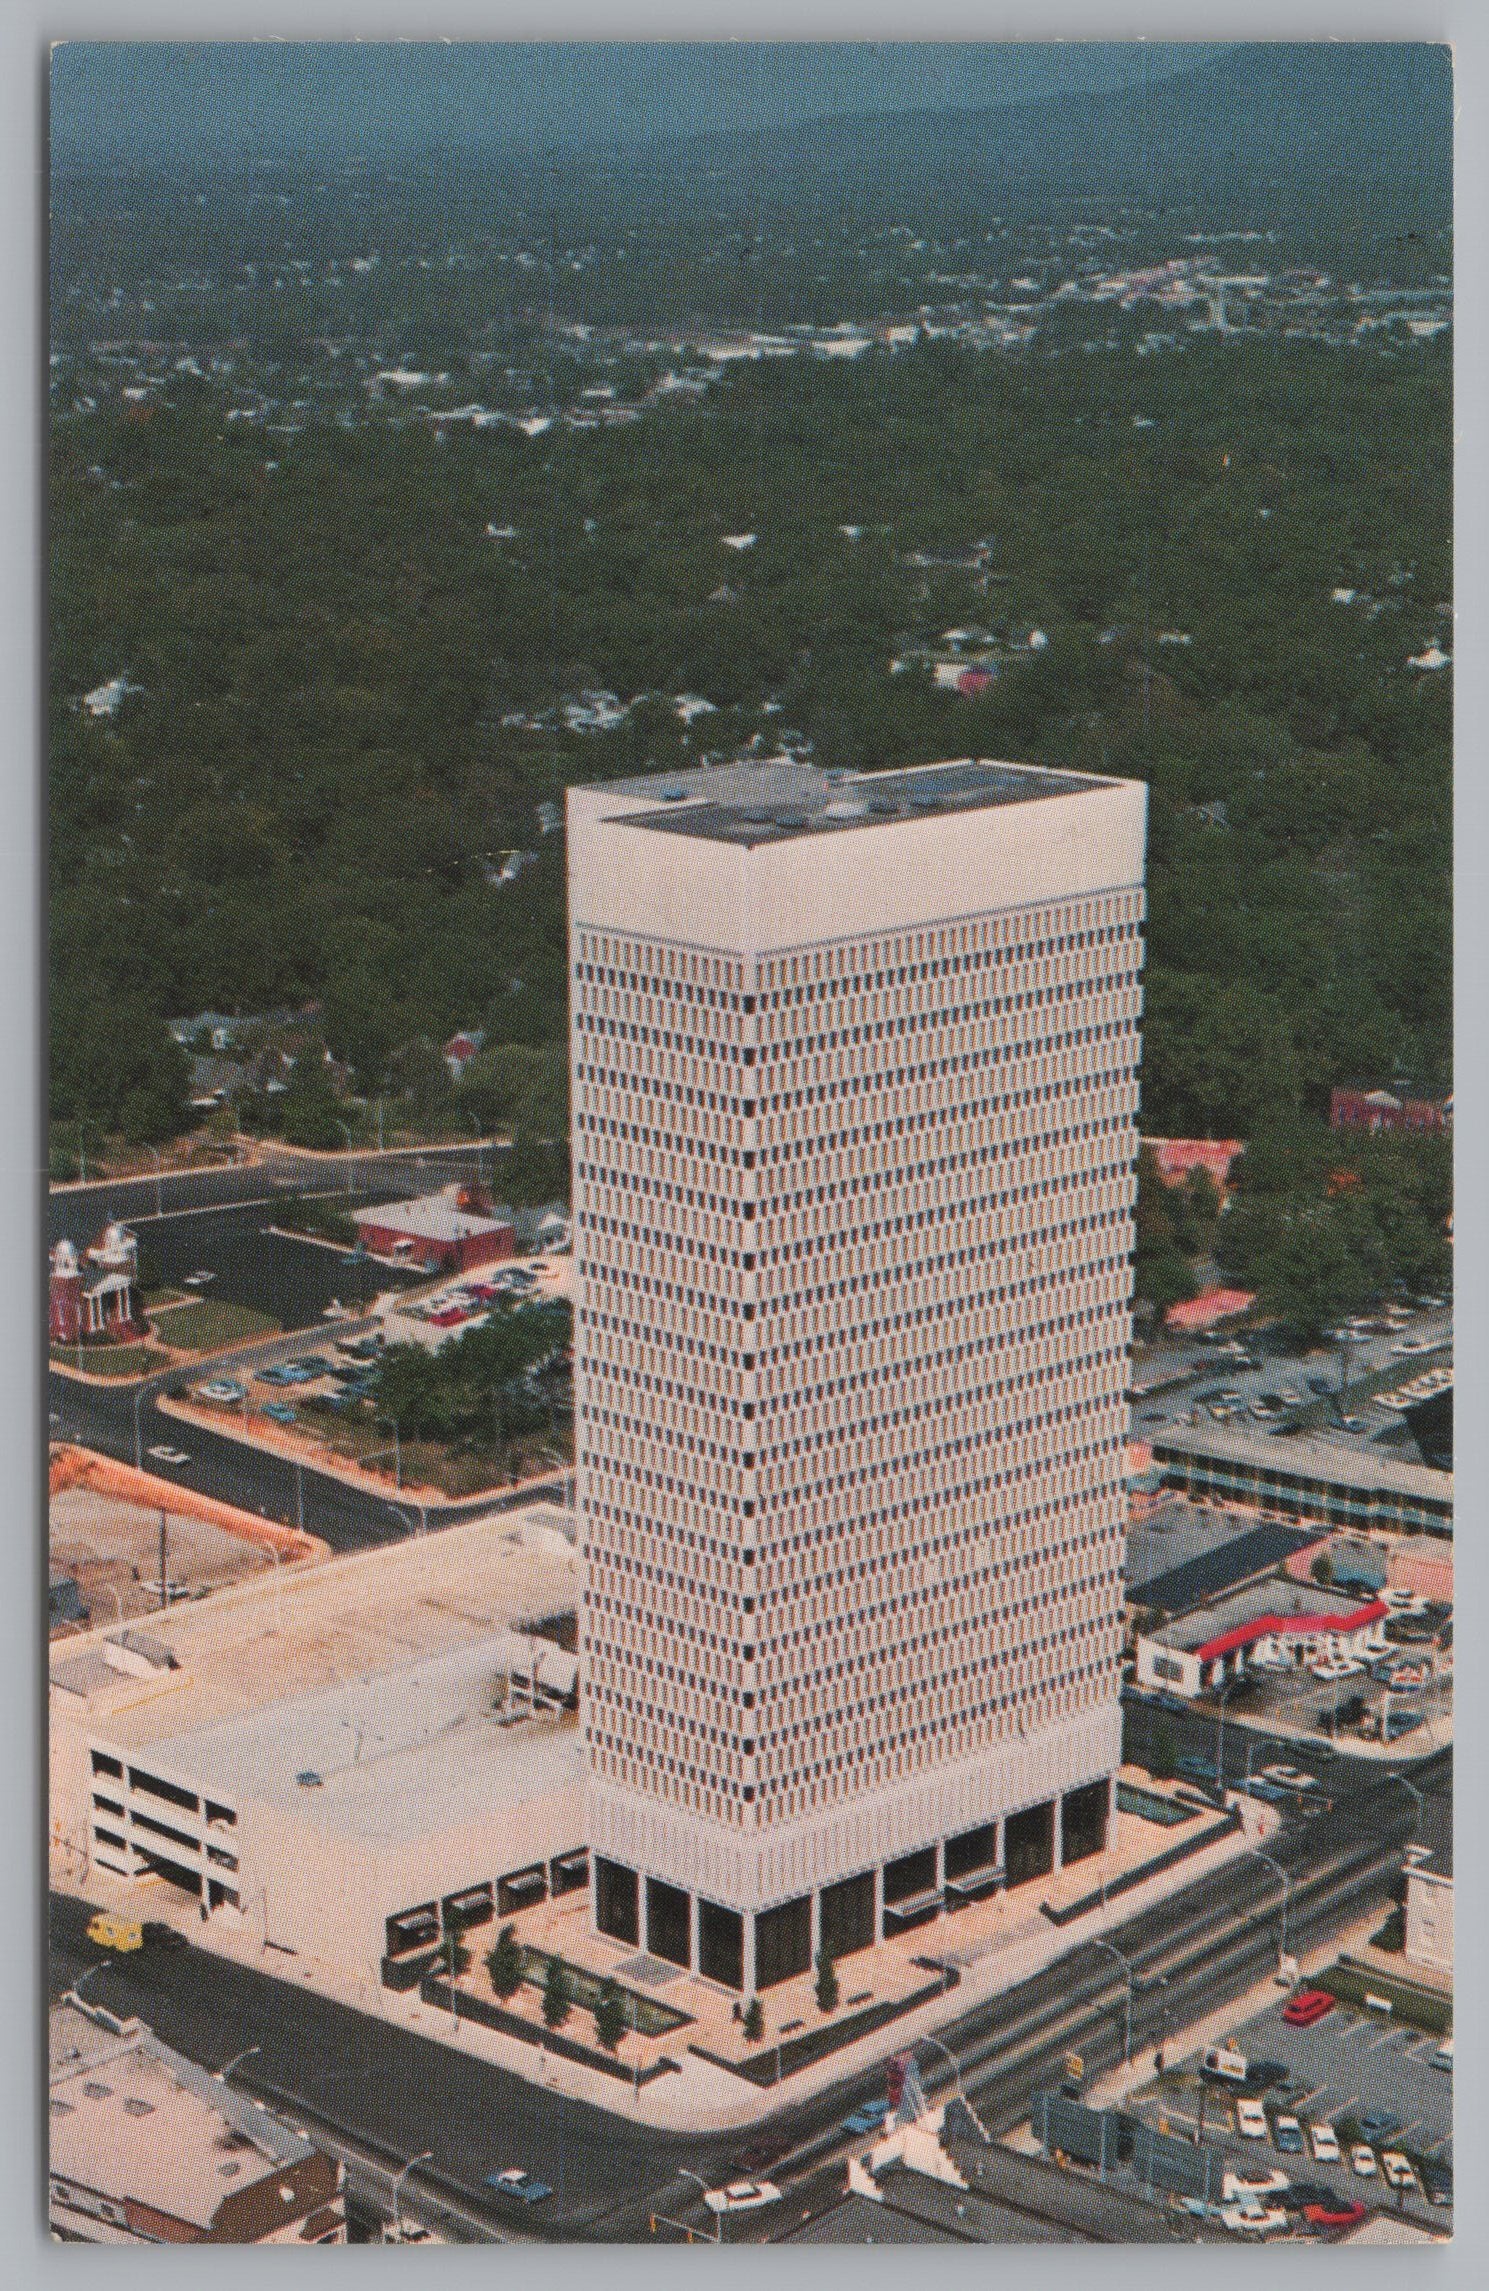 Daniel Building, 25 Stories, Greenville, South Carolina, States Tallest Building, VTG PC